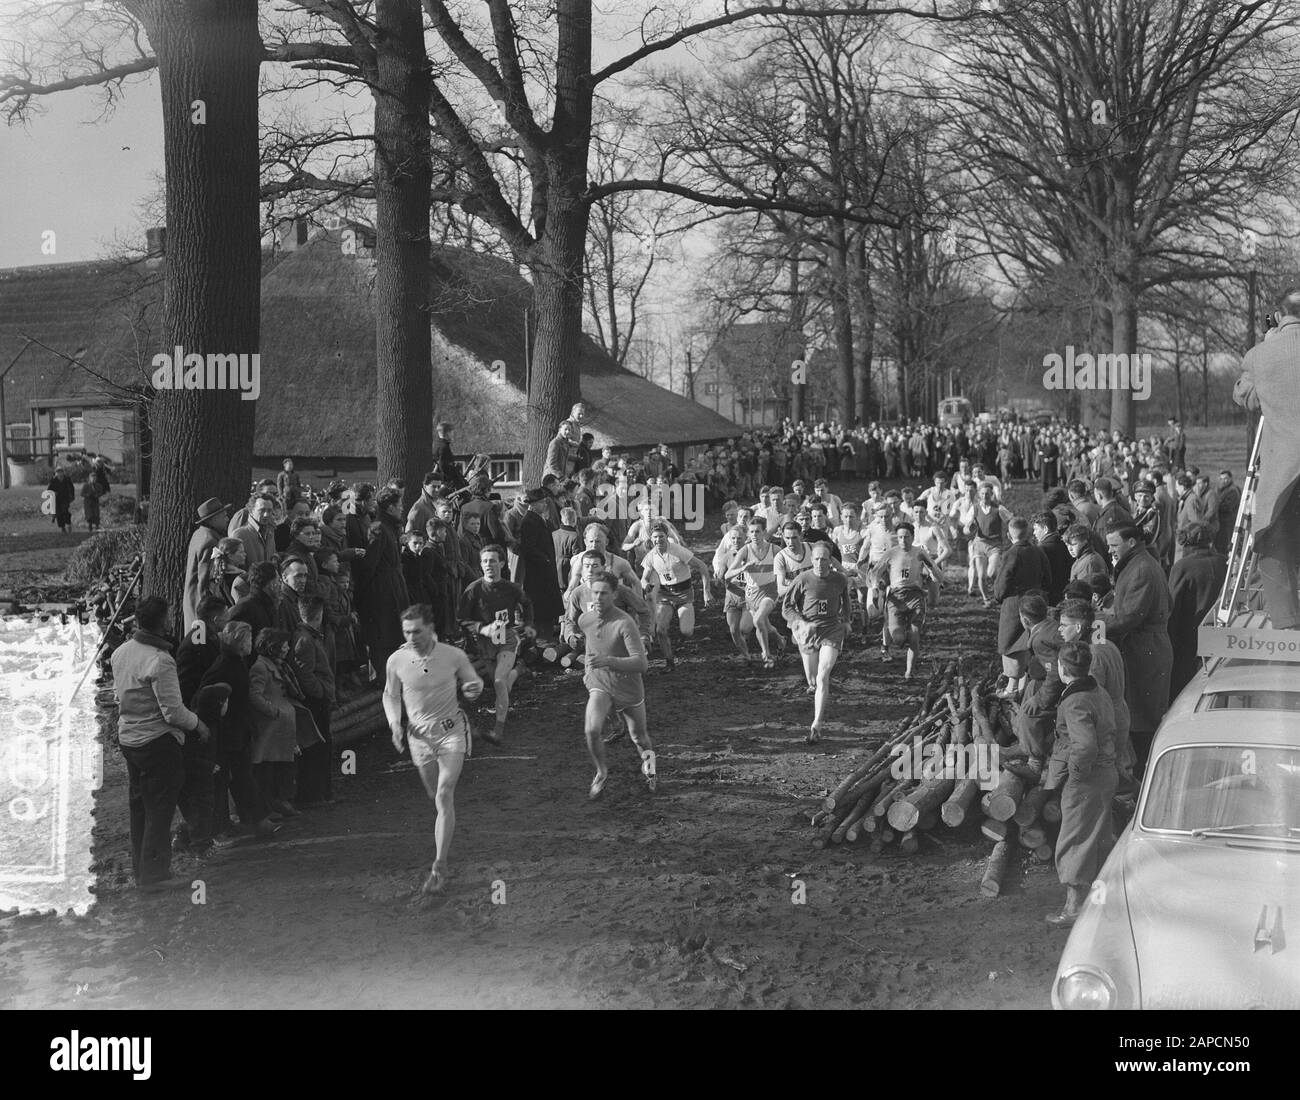 Athletics cross-championships Breda, second J. Adriaansen Date: March 6, 1955 Location: Breda Keywords: ATTLETICS, Crosschampionships Personal name: J. Adriaansen, aac, dja, trippelenberg, w van zealand Stock Photo